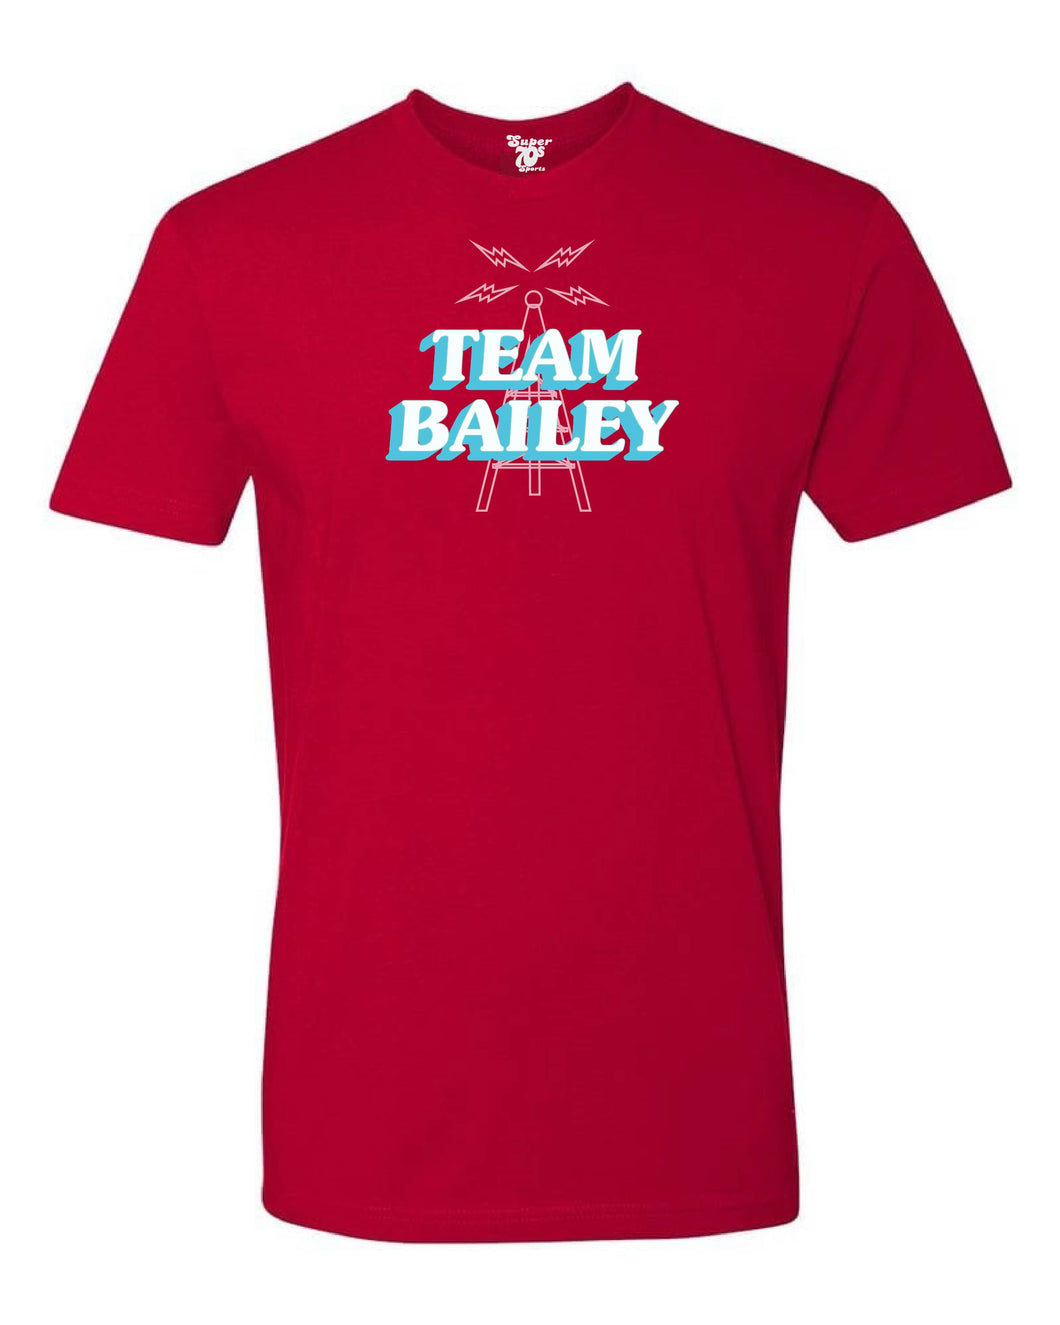 Team Bailey Tee – Super 70s Sports